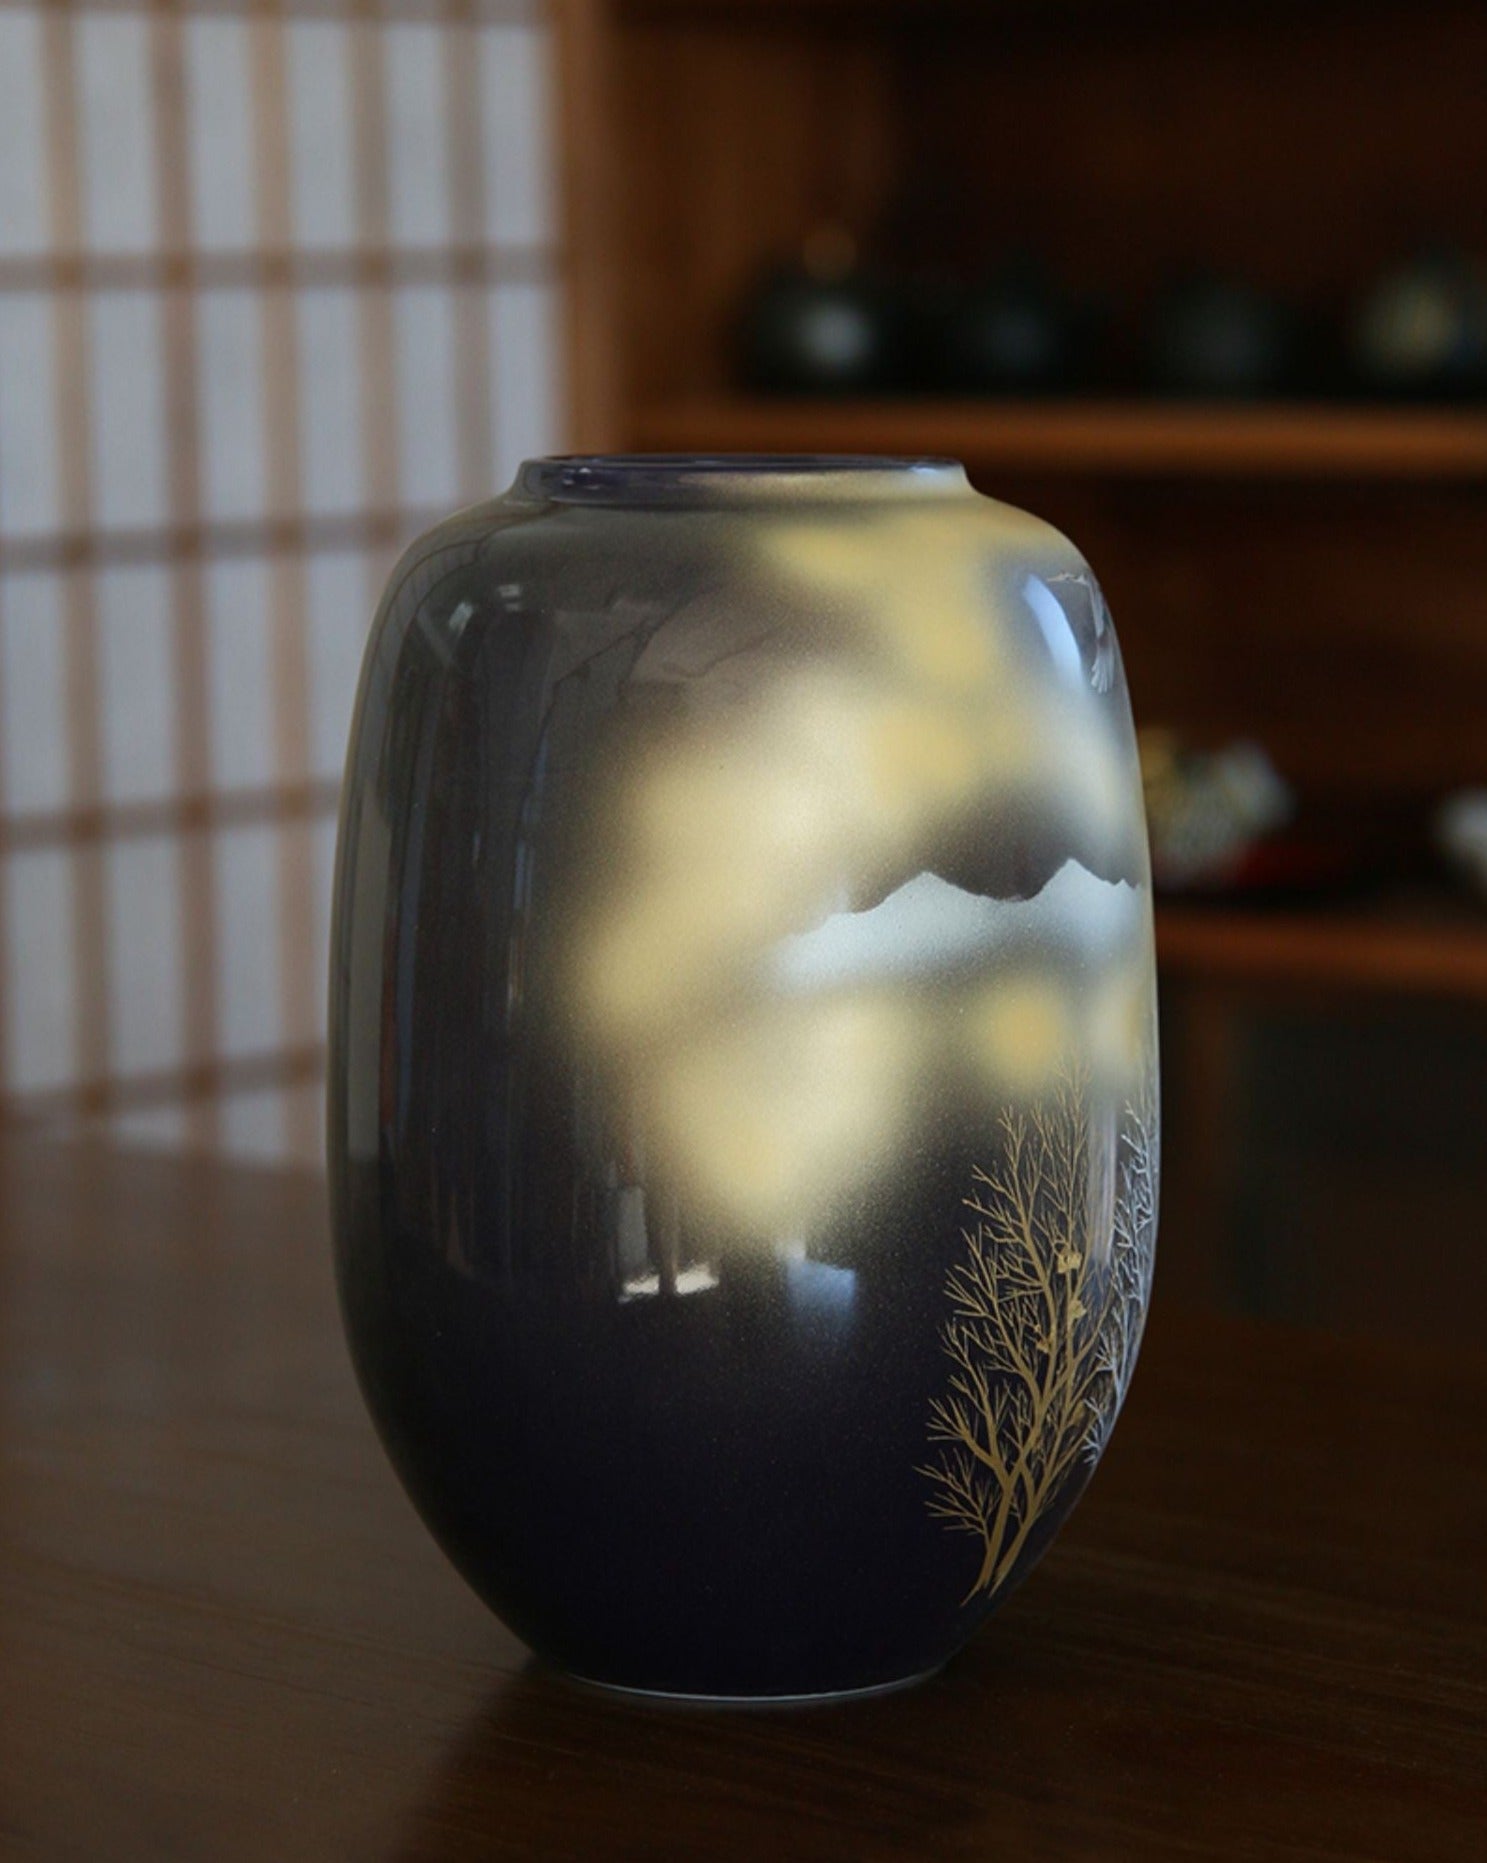 Kutaniyaki Cloud & Crane Long Oval Vase